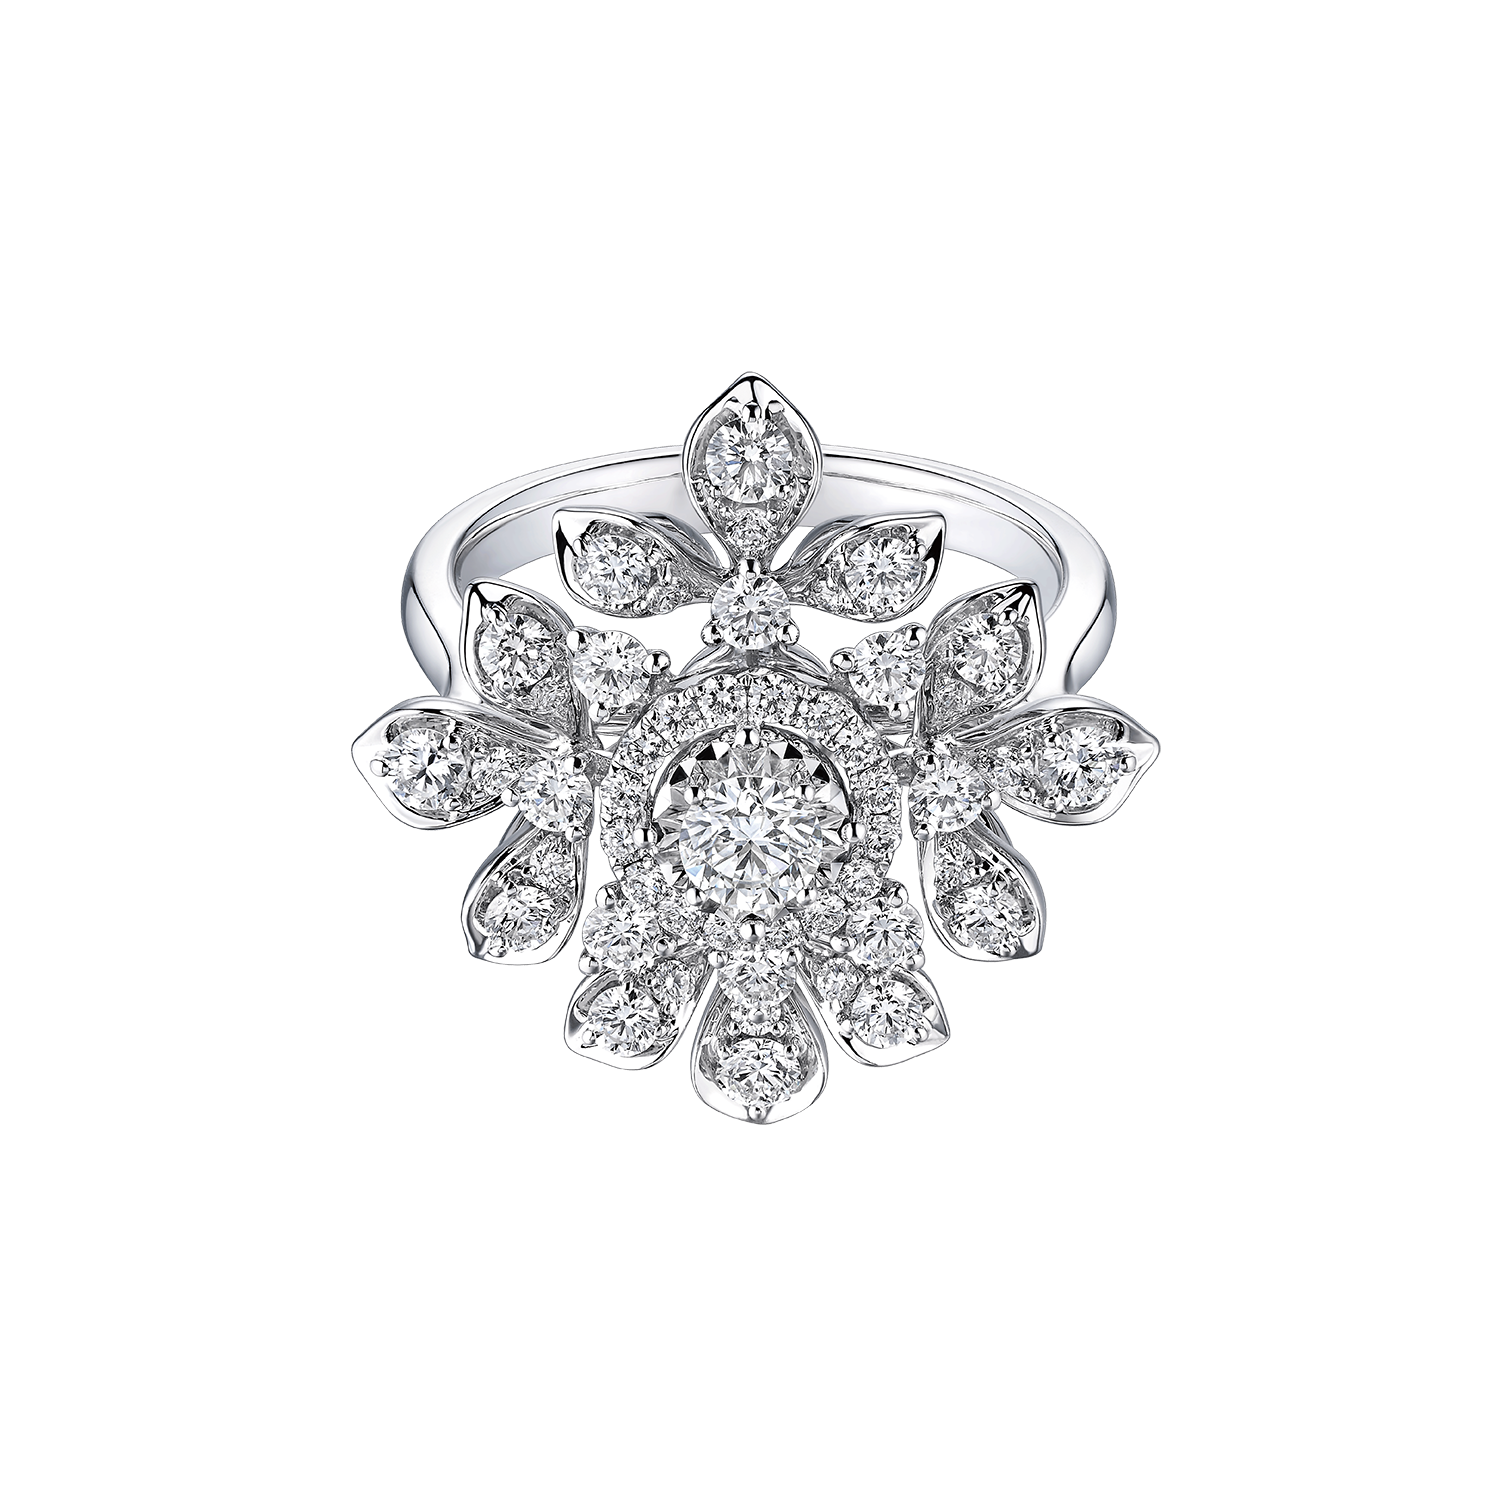 Wedding Collection "Shining Moment" 18K Gold Diamond Ring